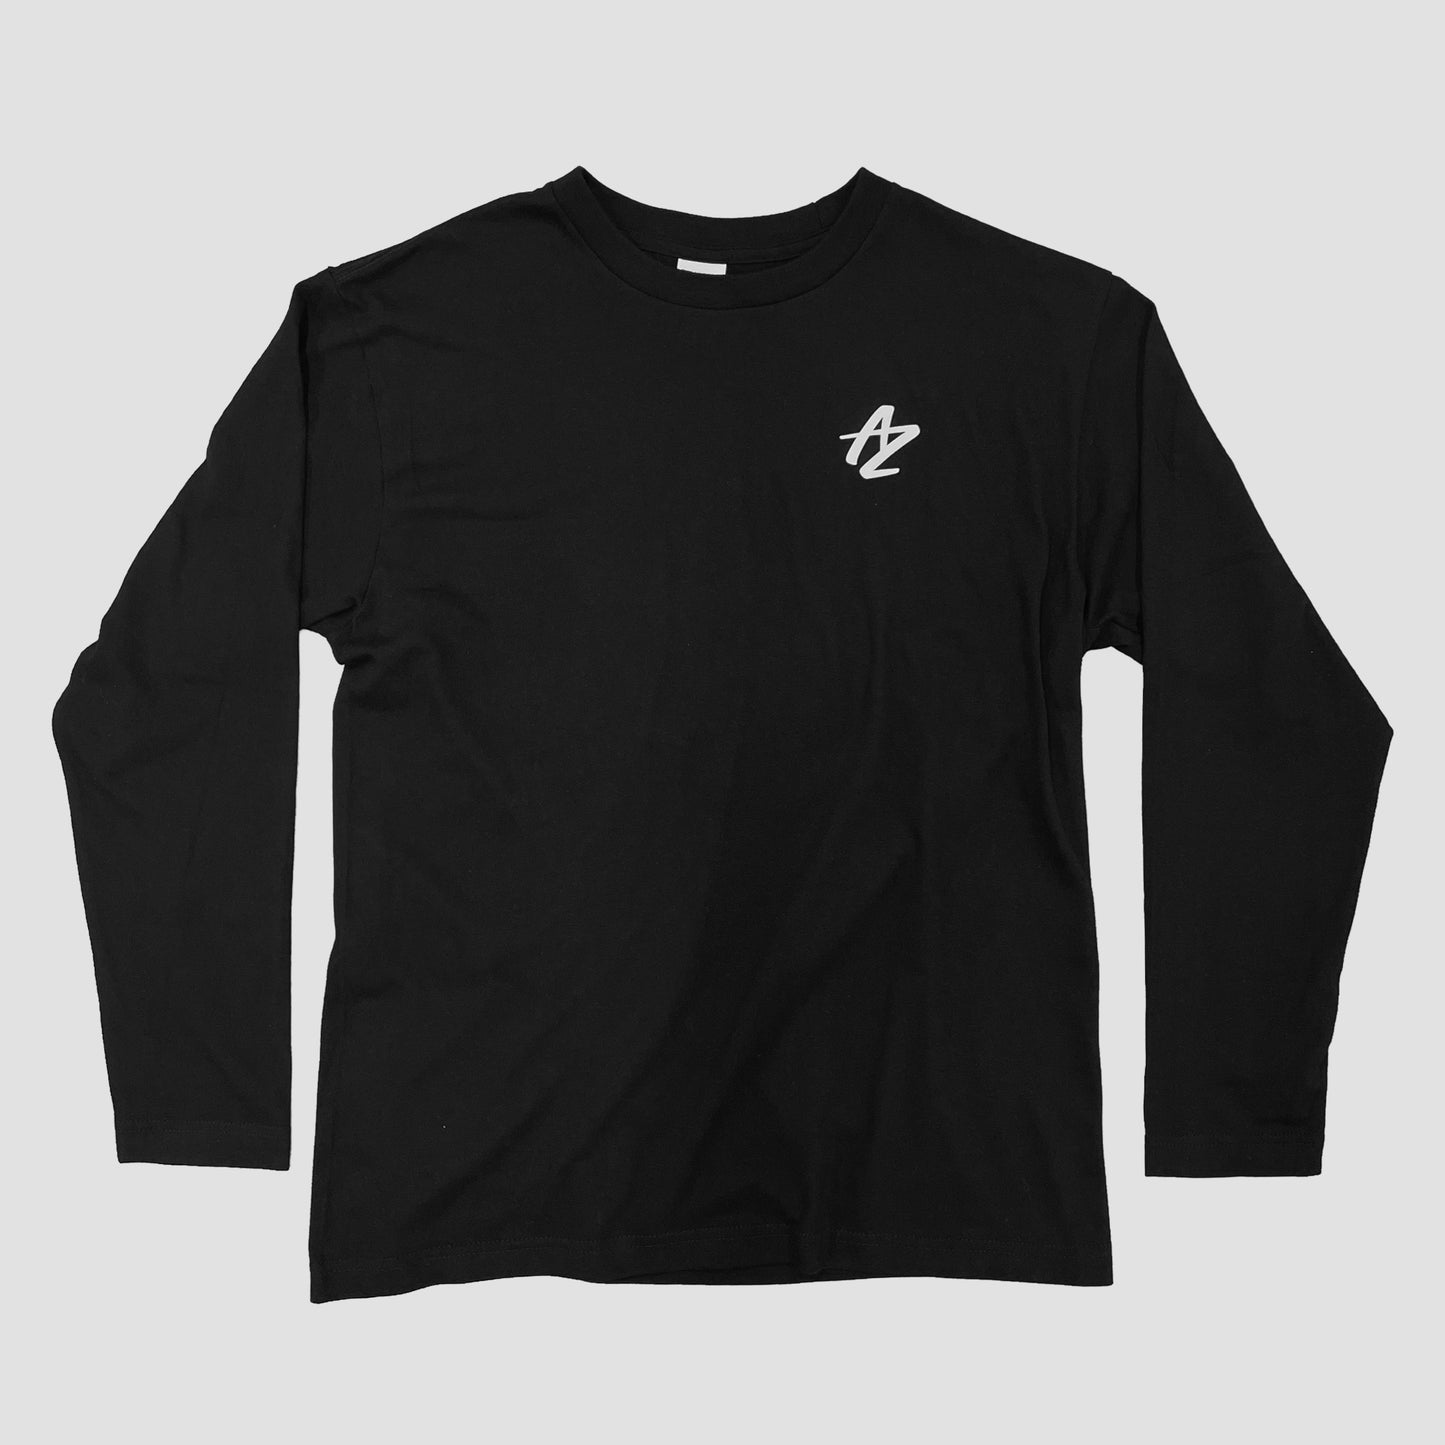 AZロゴTシャツ(長袖) ブラック